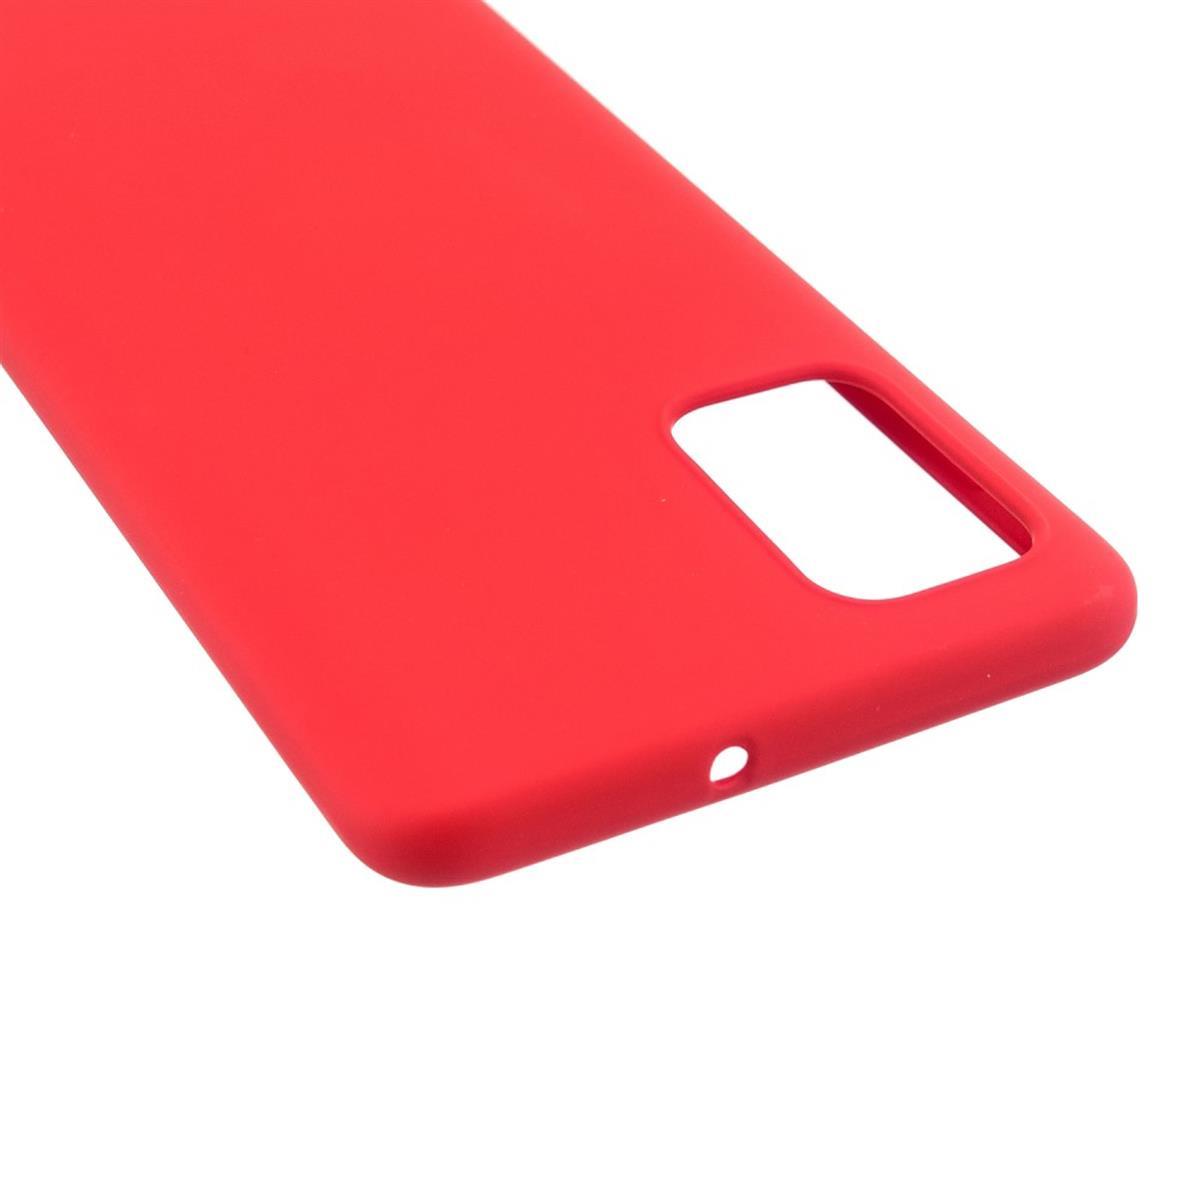 Hülle für Samsung Galaxy A52/A52 5G/A52s 5G Handy Silikon Case Cover Matt Rot